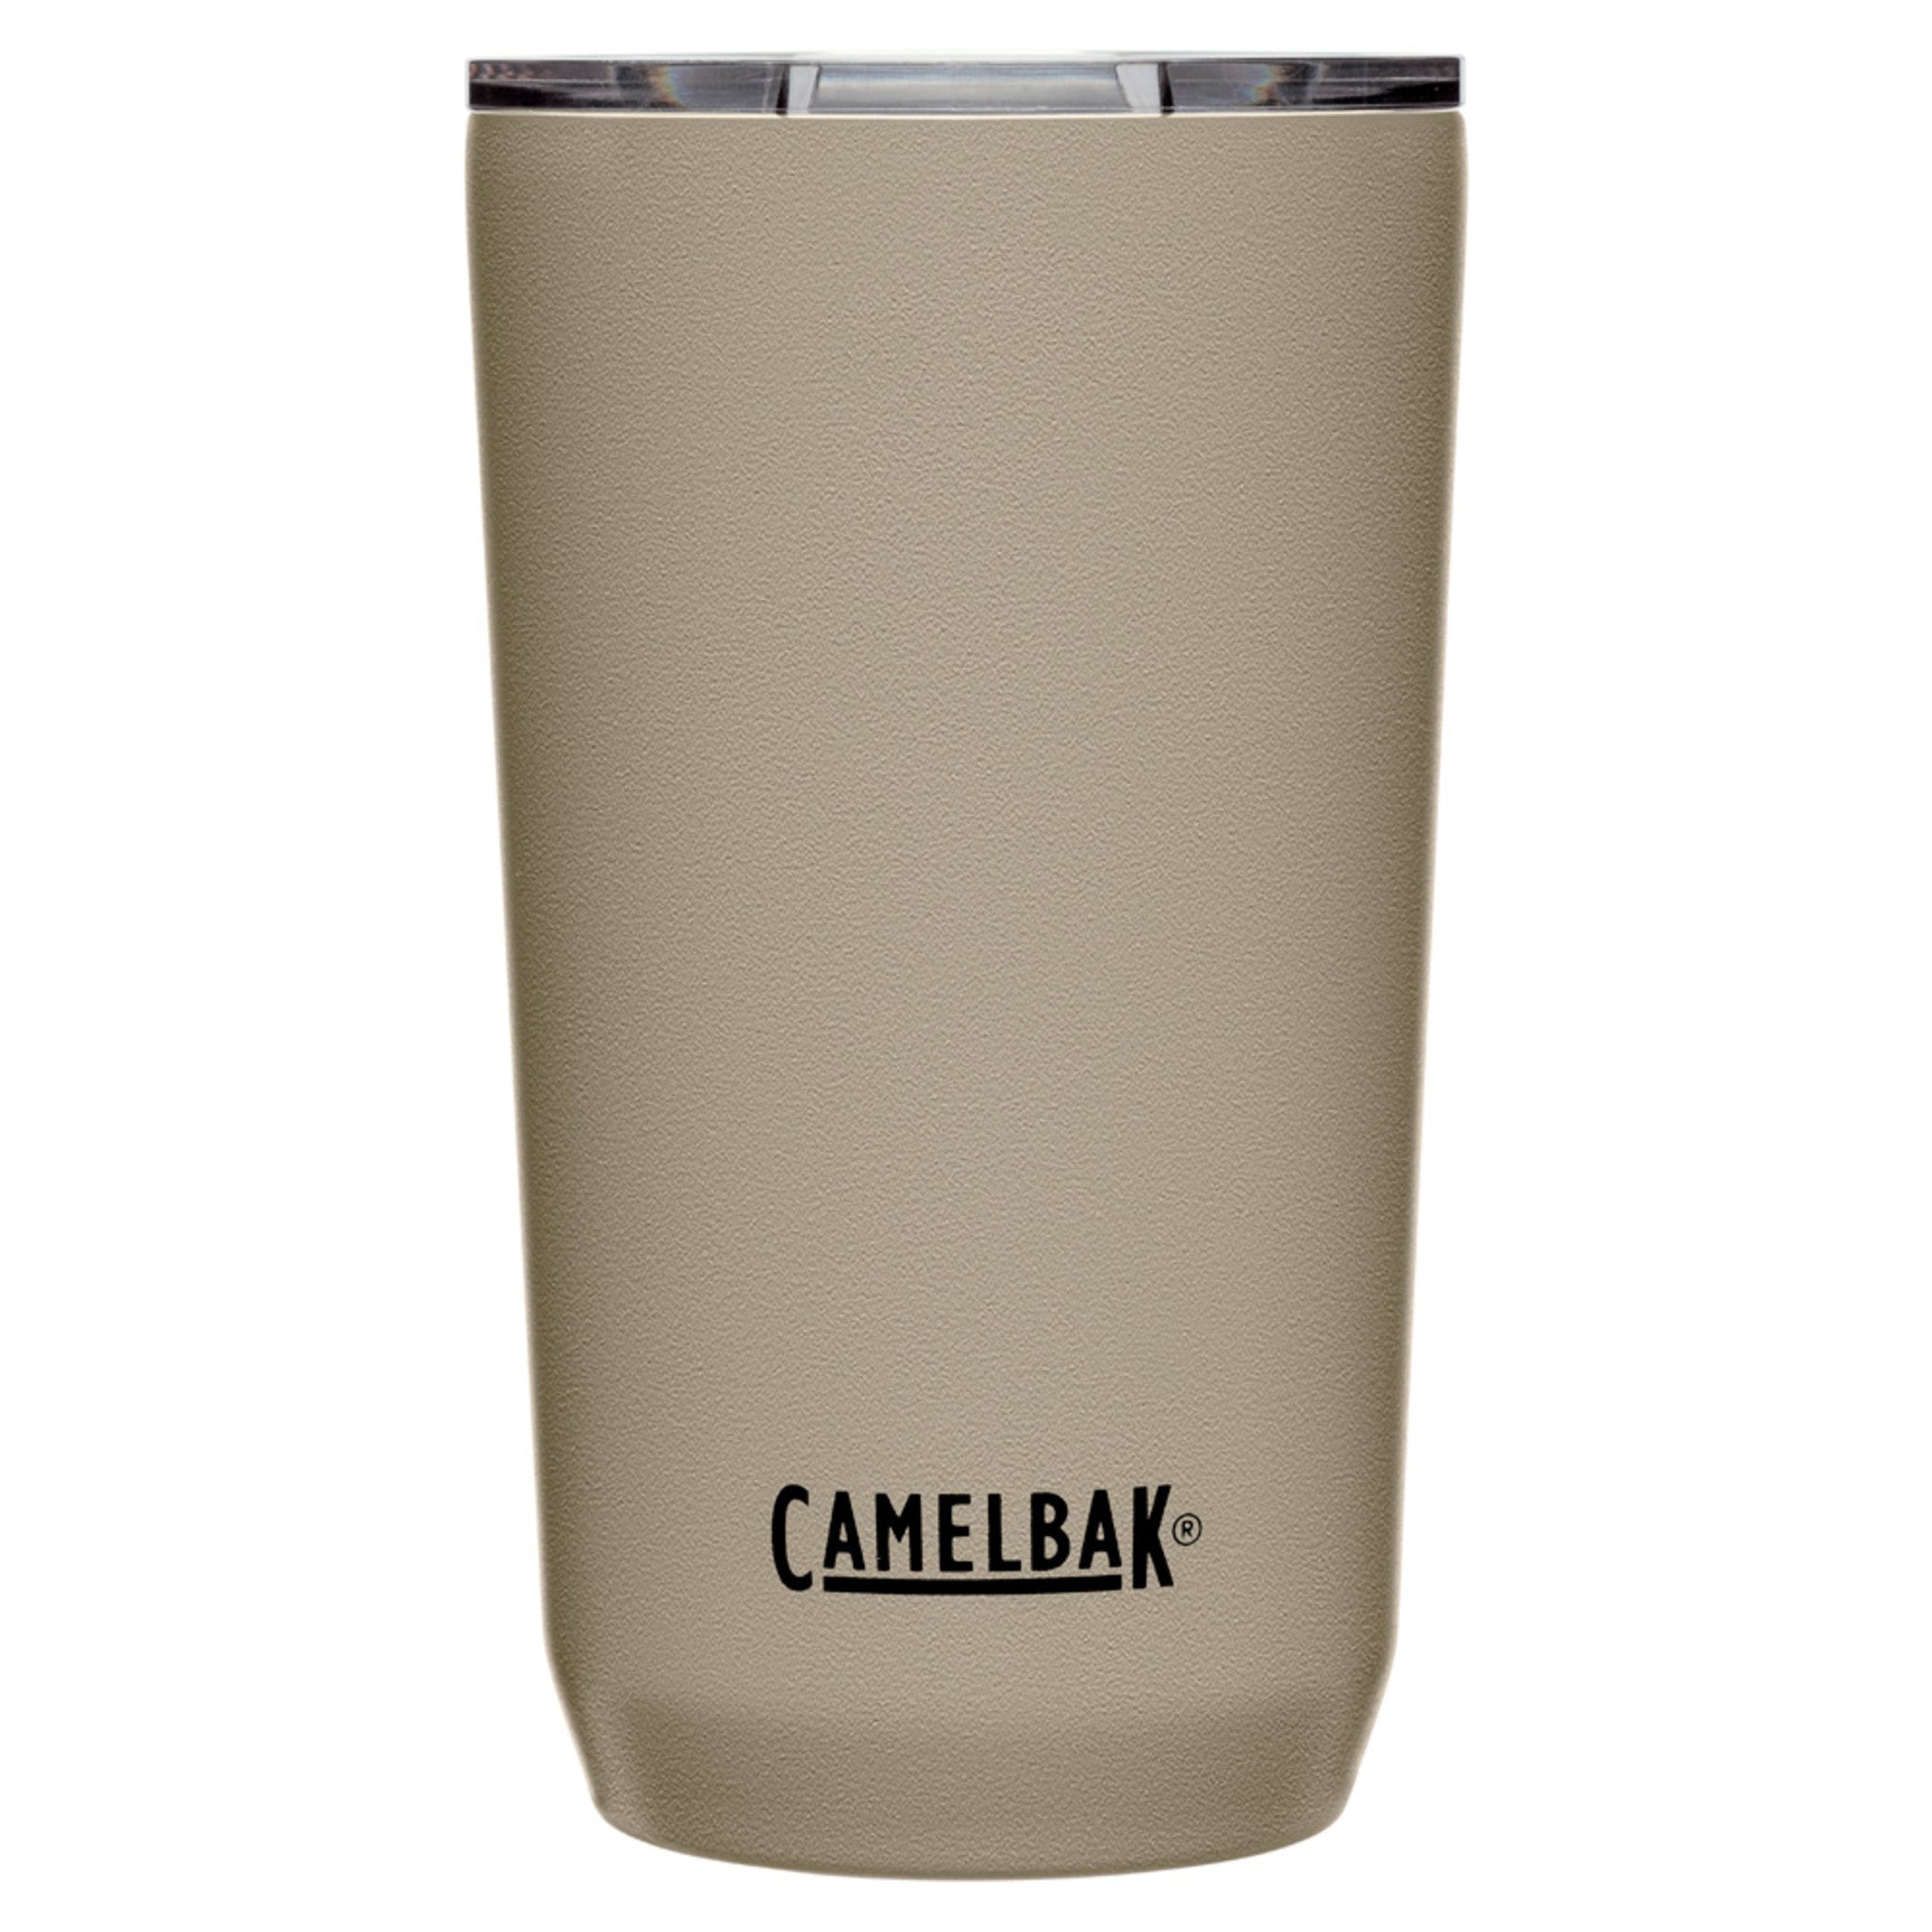 CamelBak Horizon 16 oz Insulated Stainless Steel Tumbler